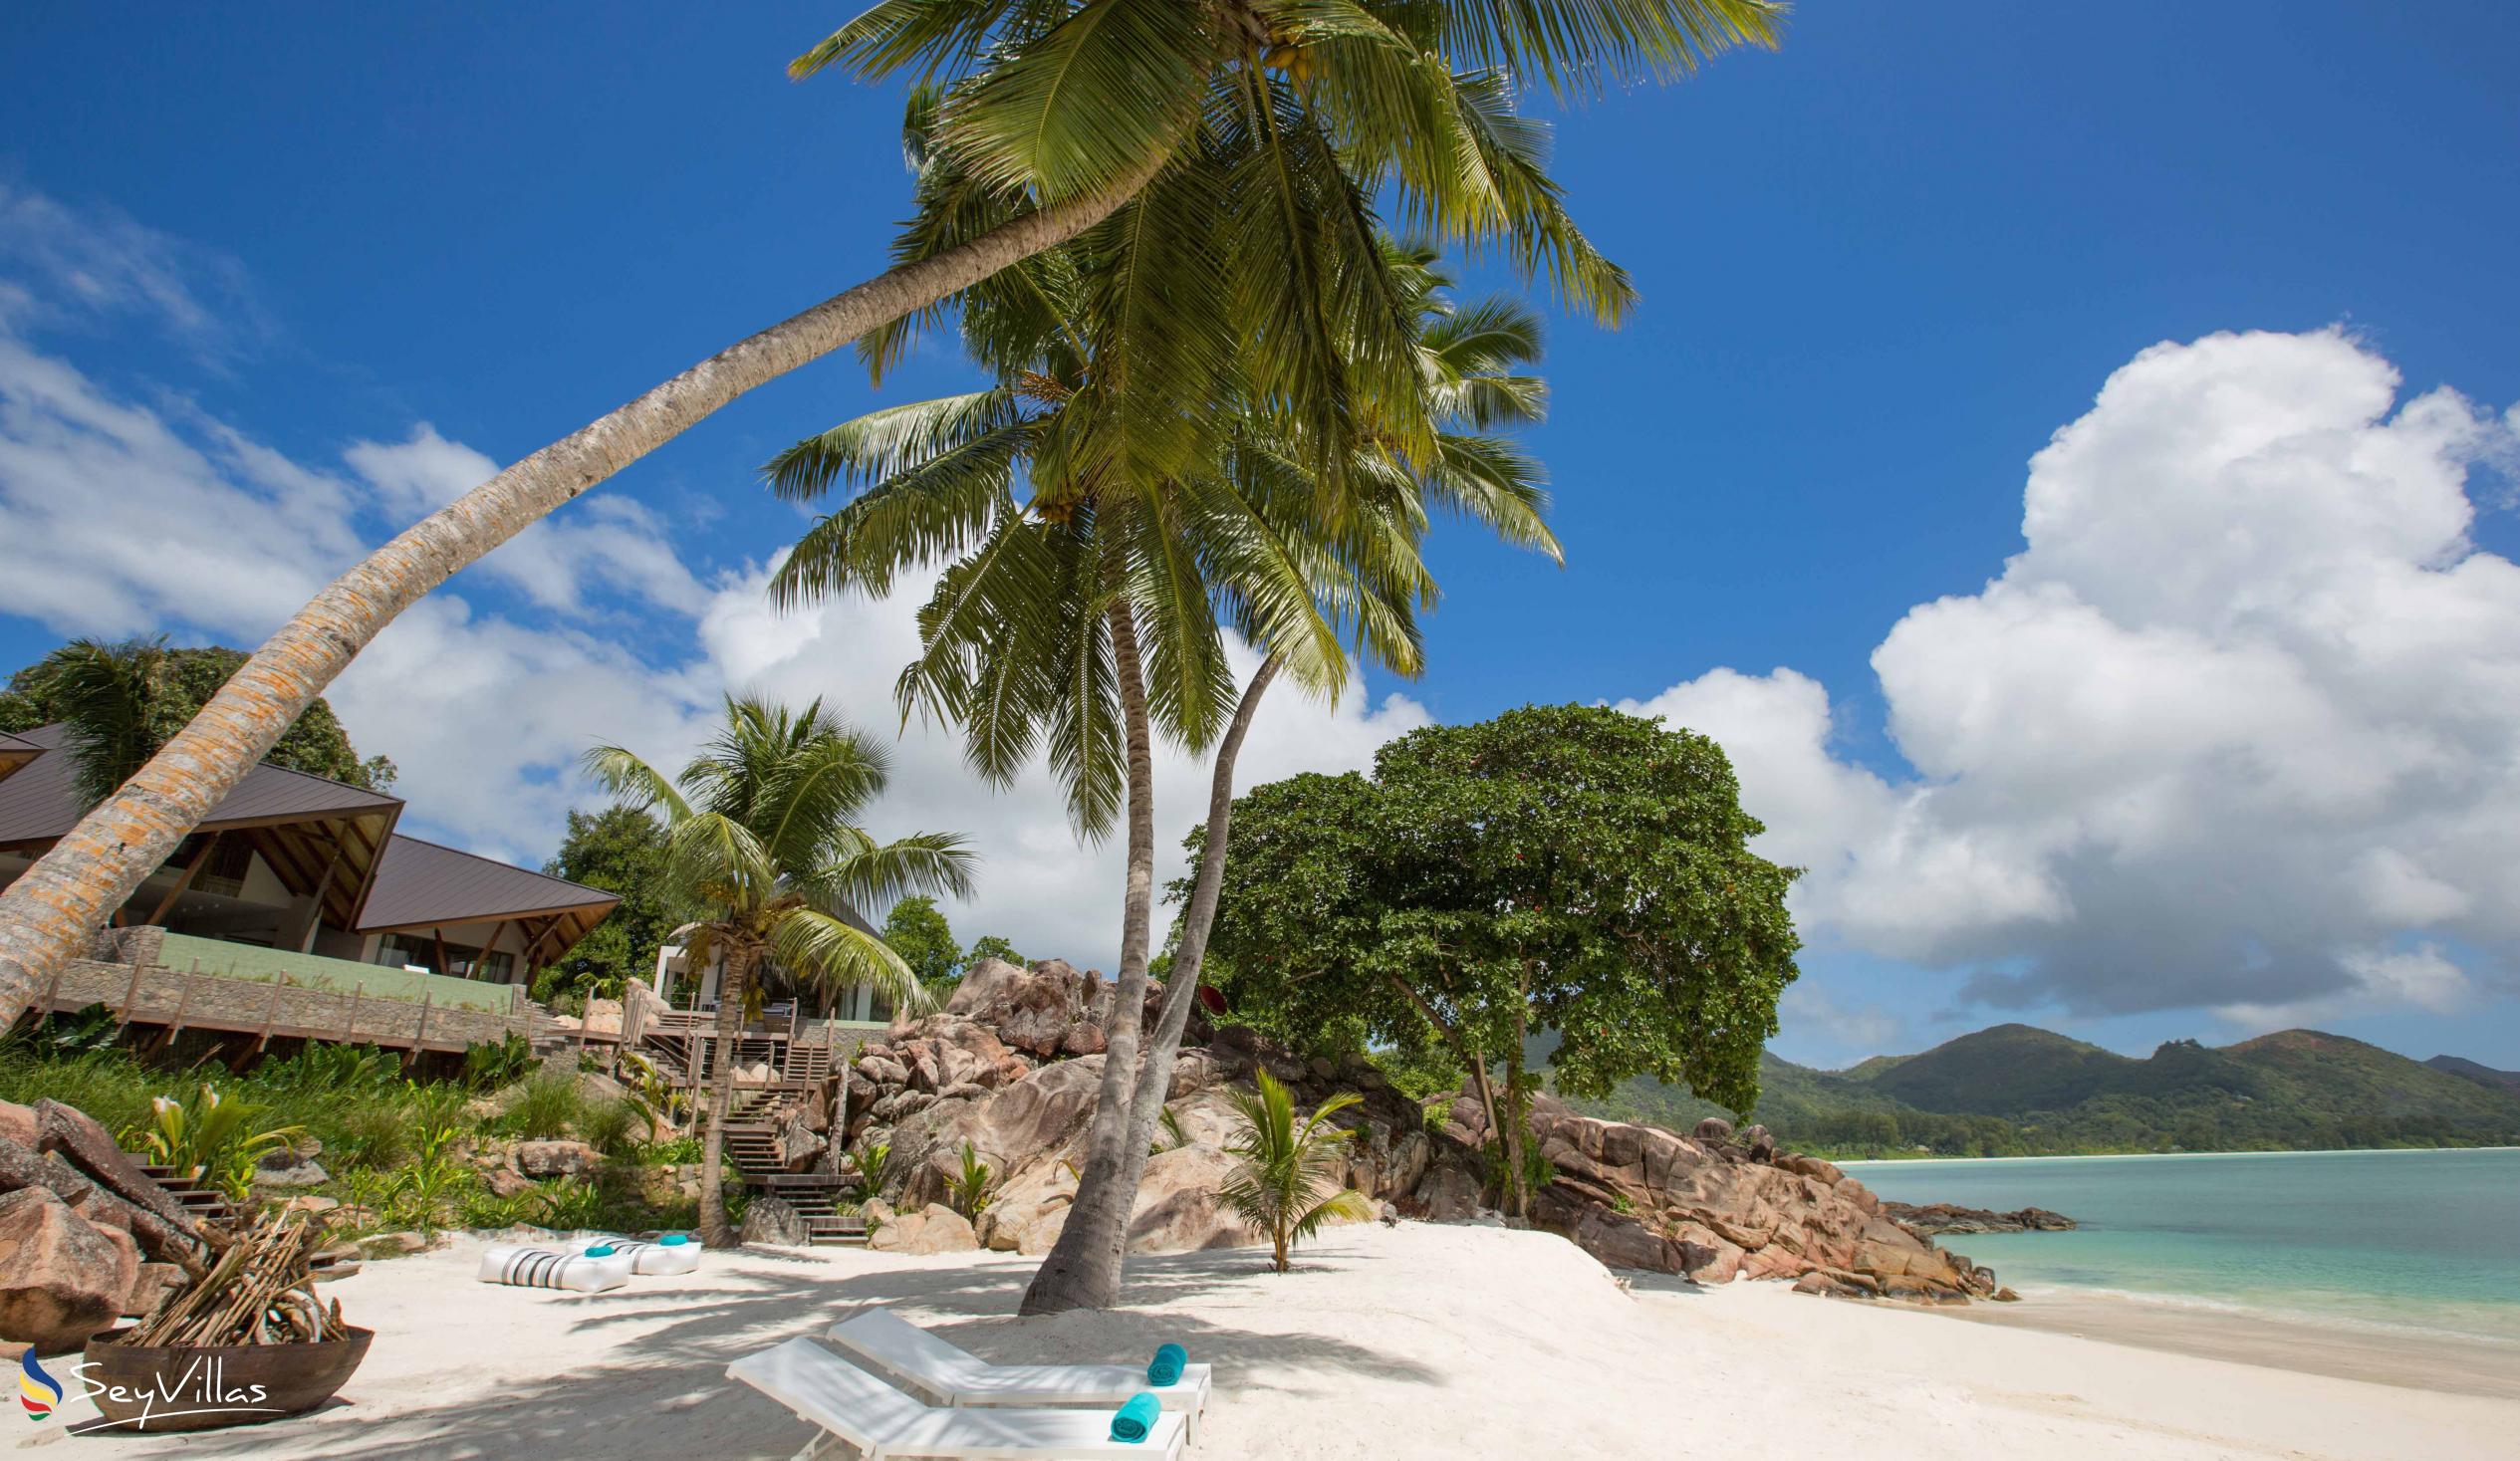 Photo 8: Villa Deckenia - Outdoor area - Praslin (Seychelles)